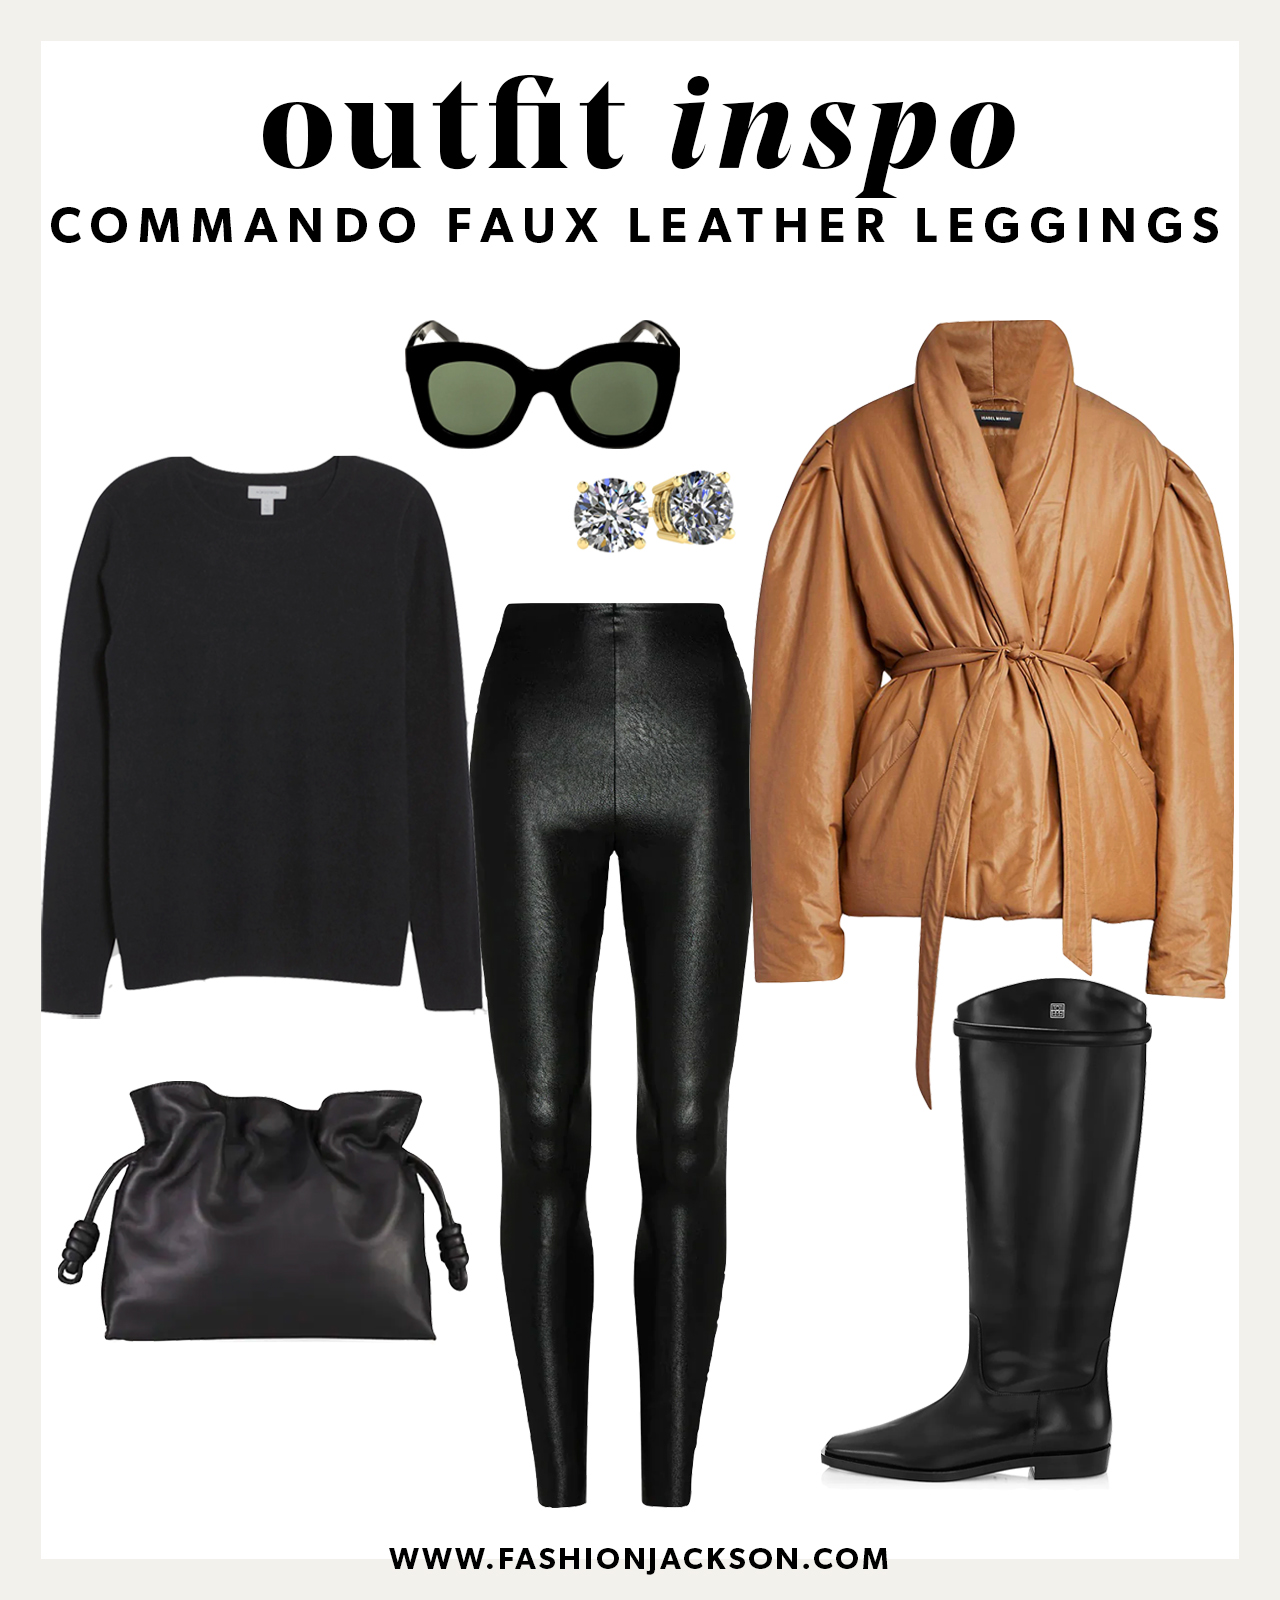 Spanx Vs Commando: Faux Leather Leggings Review & Comparison - Fashion  Jackson